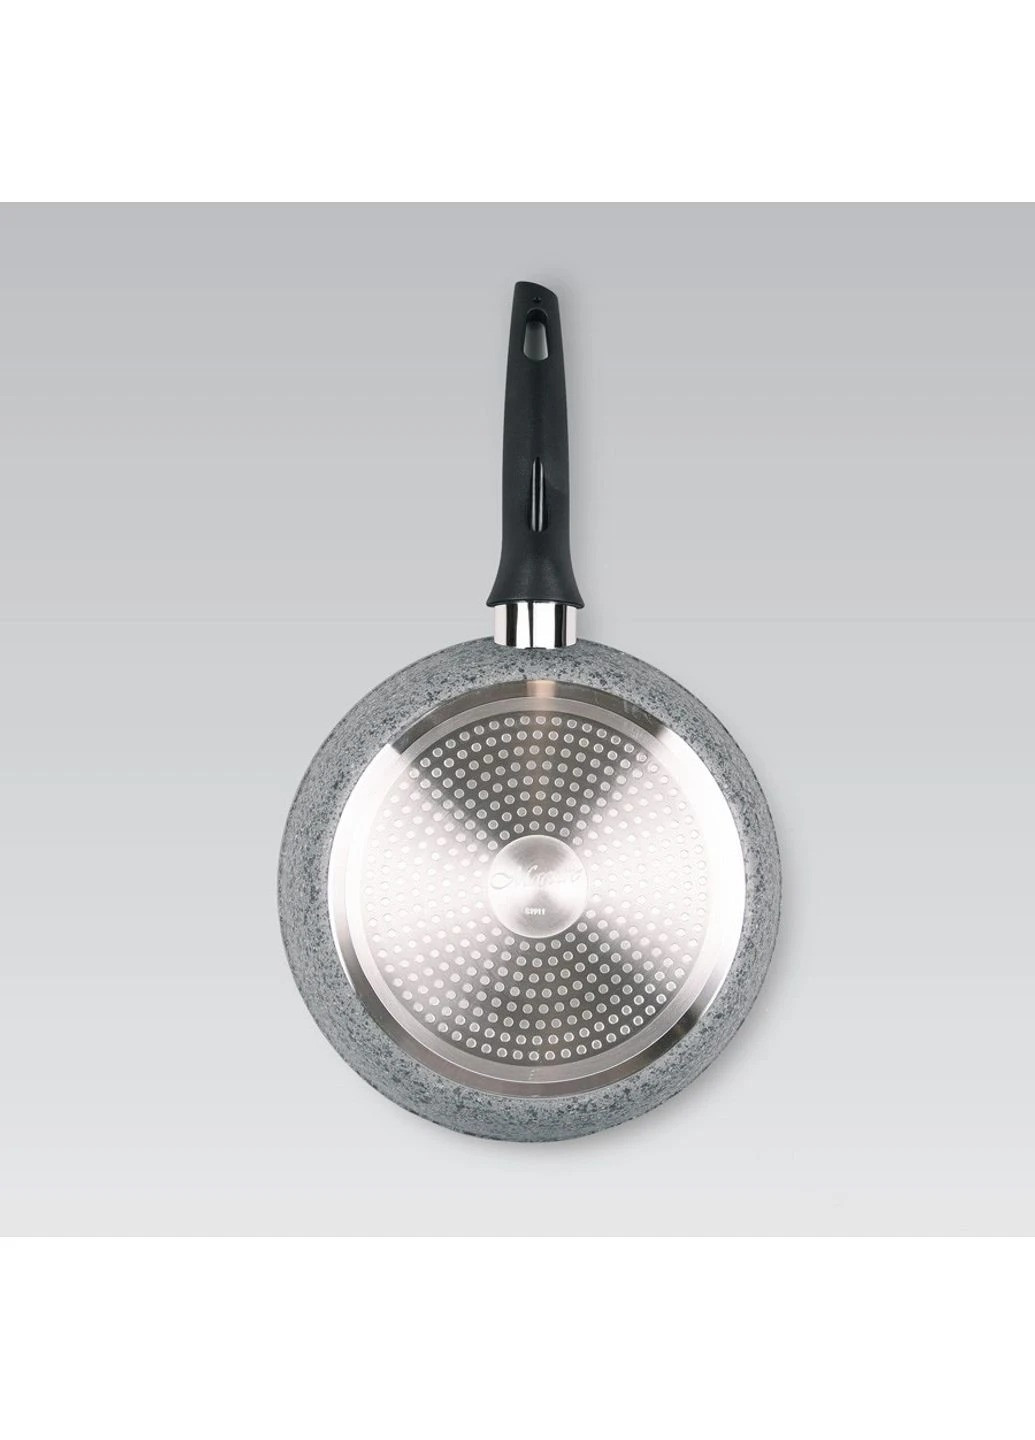 Сковорода універсальна MR-1210-24-N 24 см сіра алюміній Maestro (259447839)